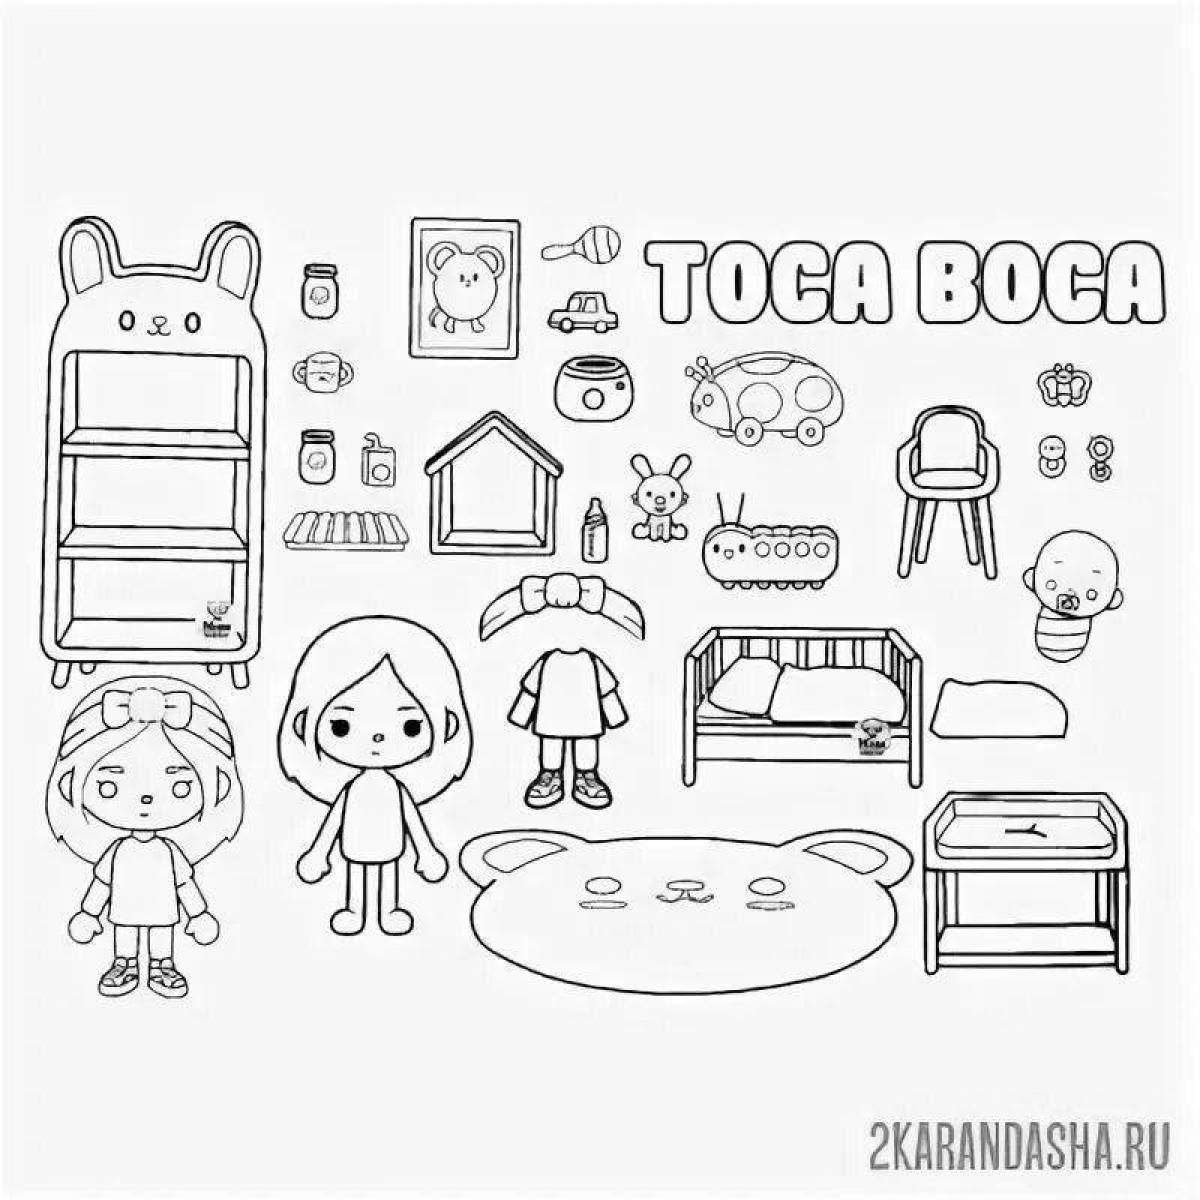 Toka boca bright furniture